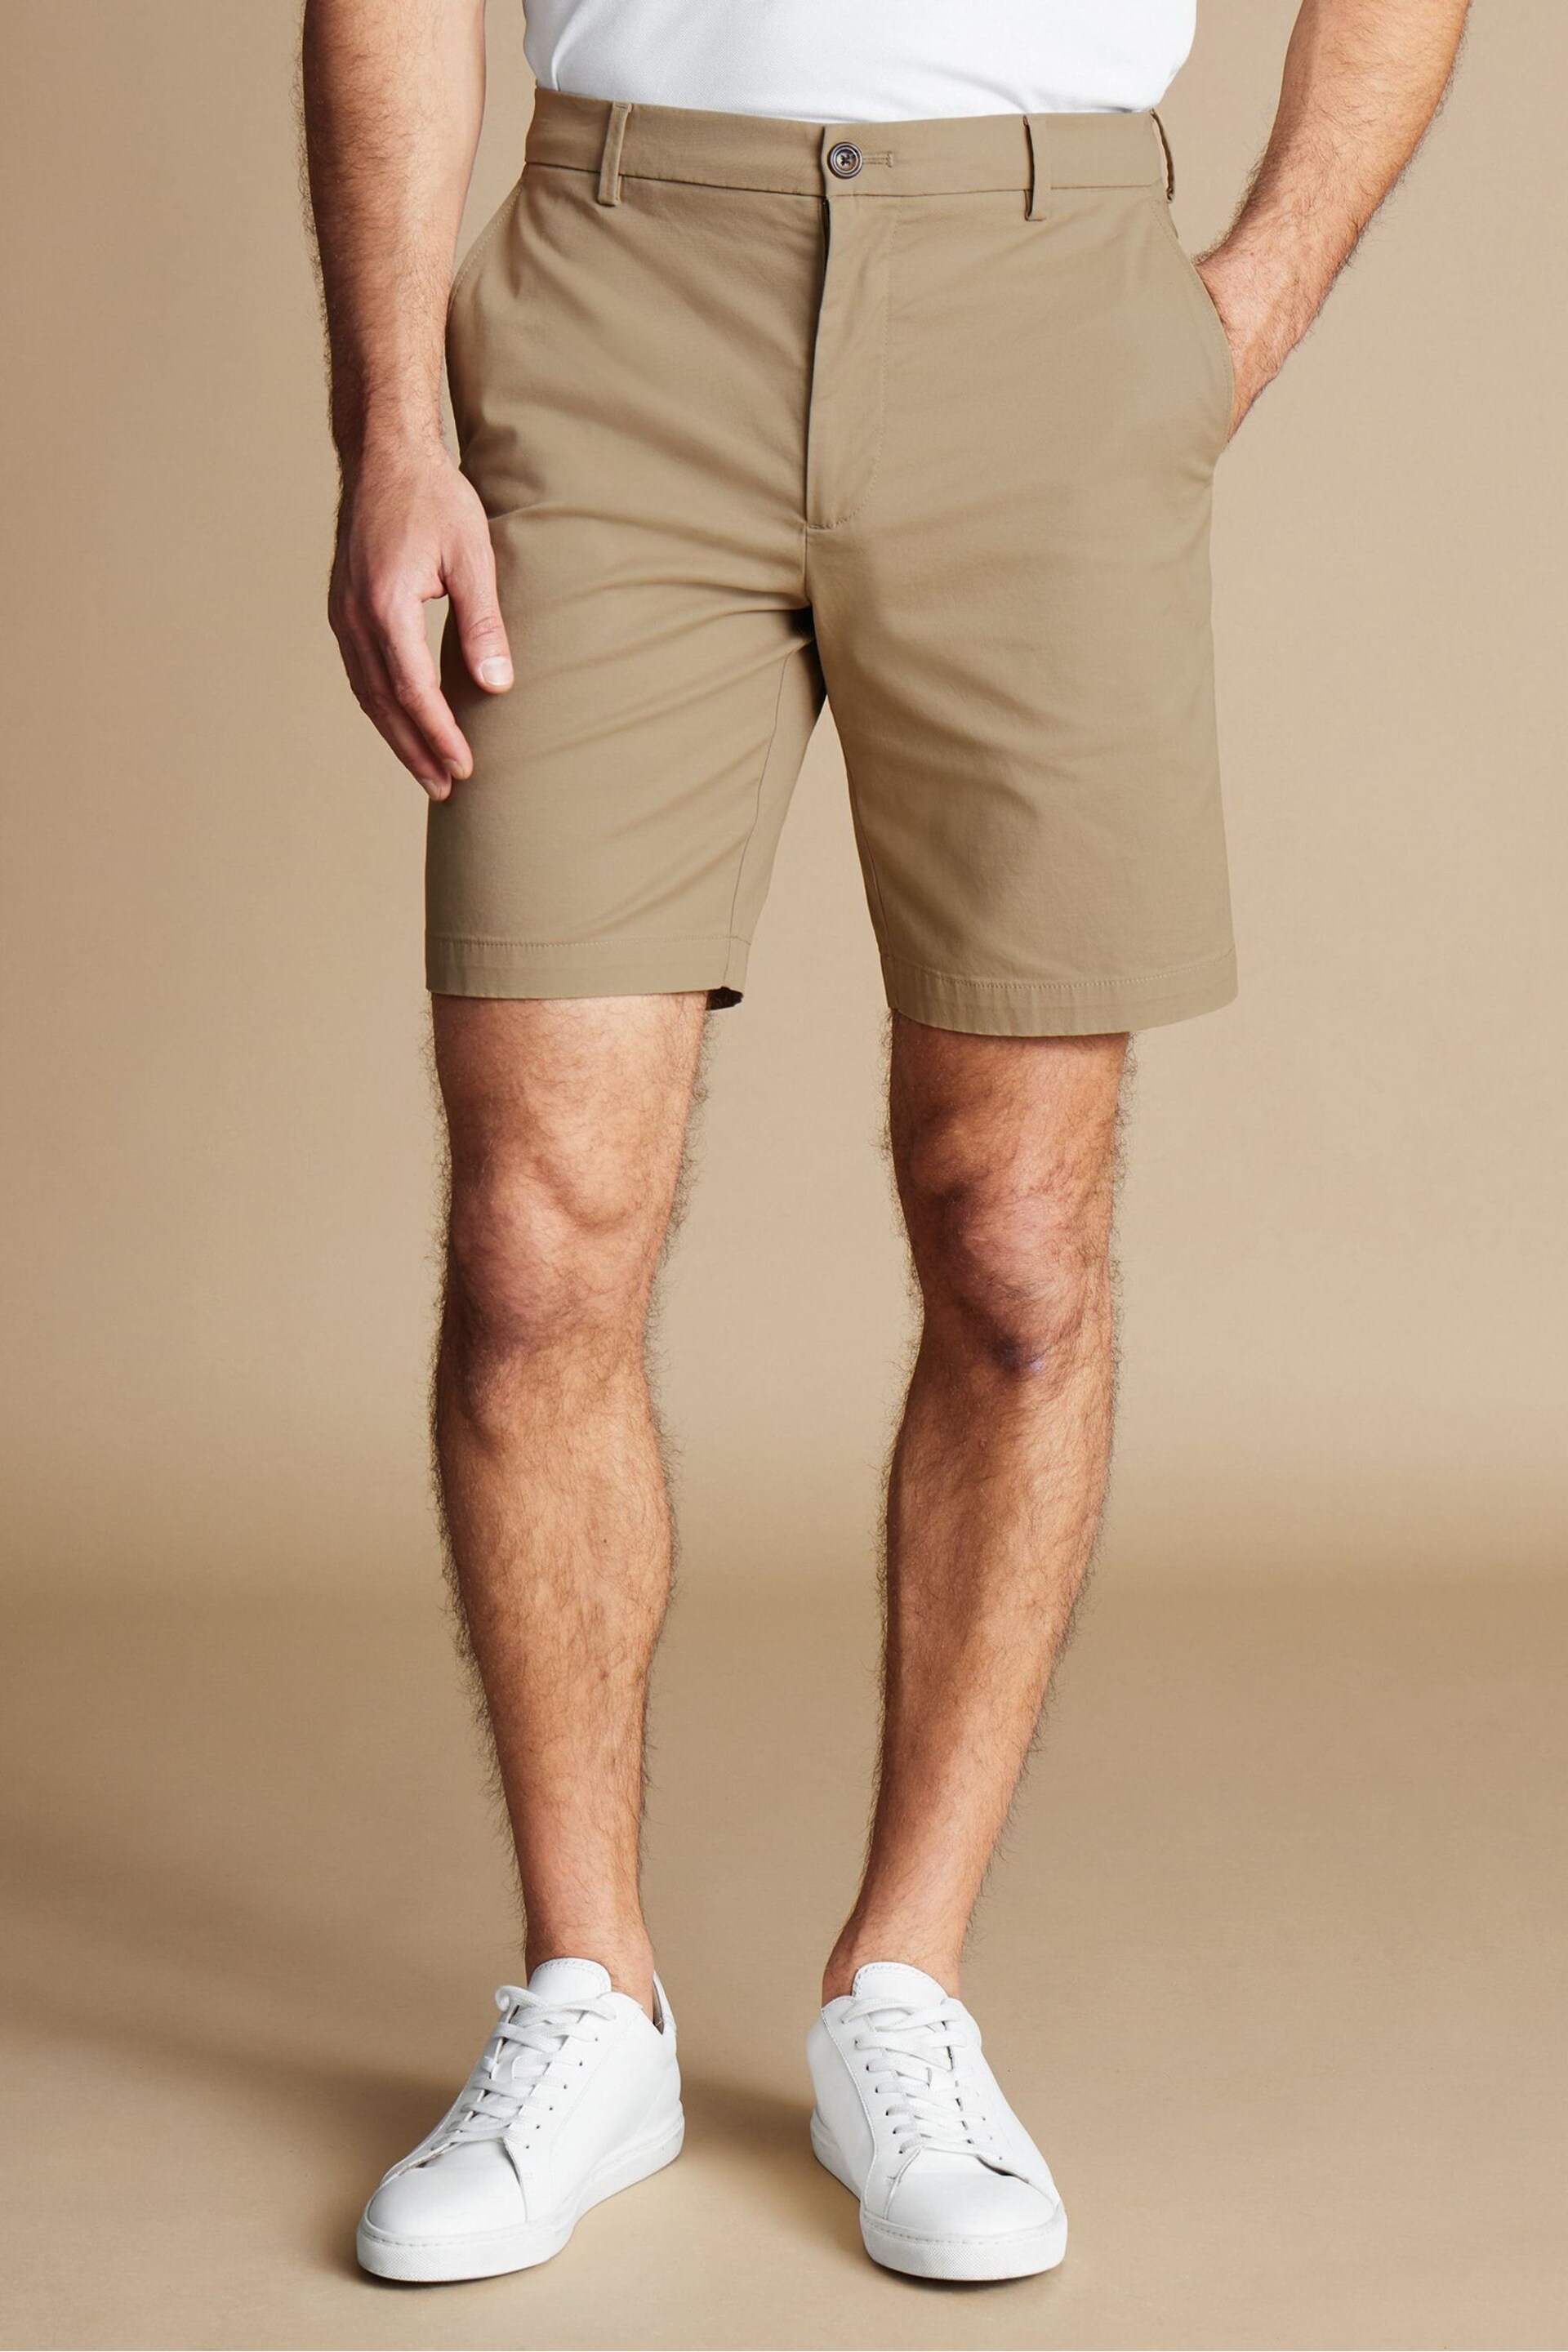 Charles Tyrwhitt Brown Cotton Shorts - Image 1 of 6